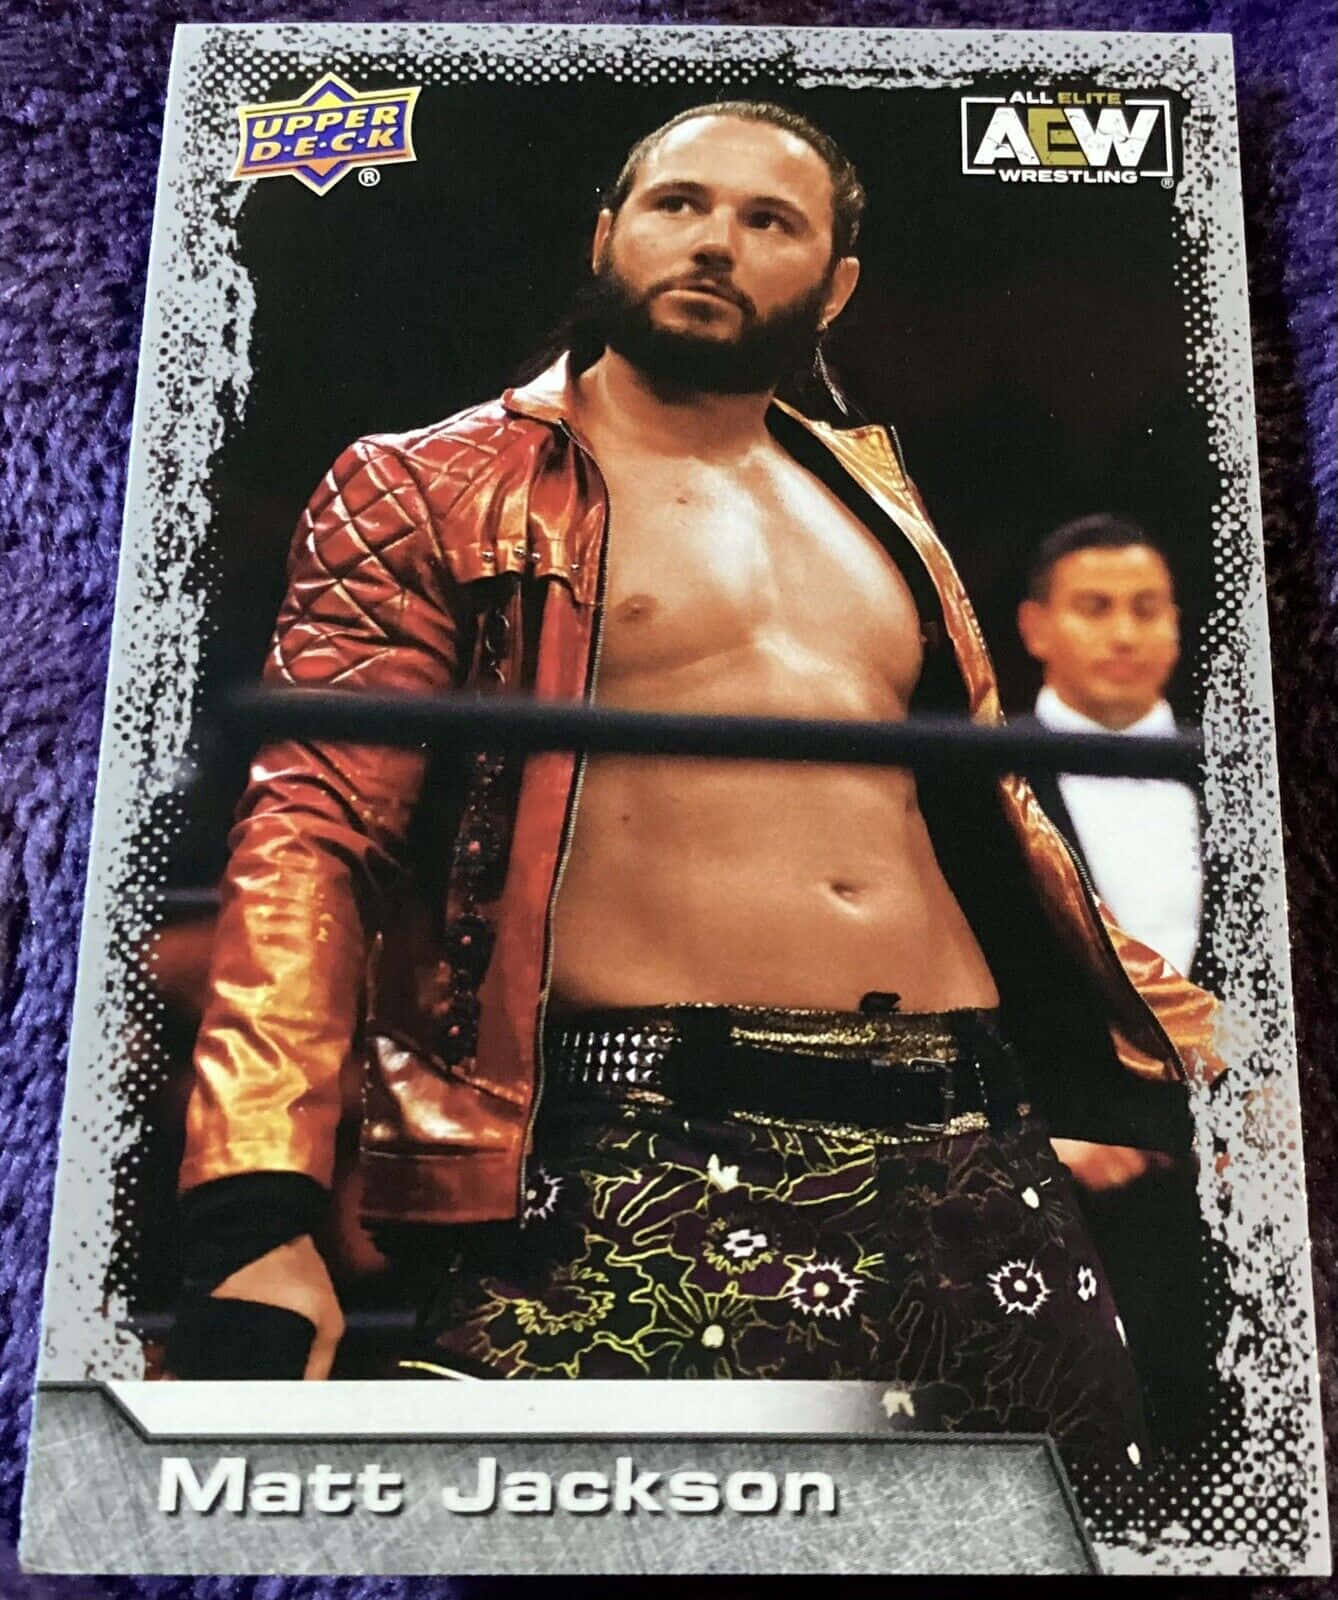 American Professional Wrestler Matt Jackson Upper Deck Trading Card Picture